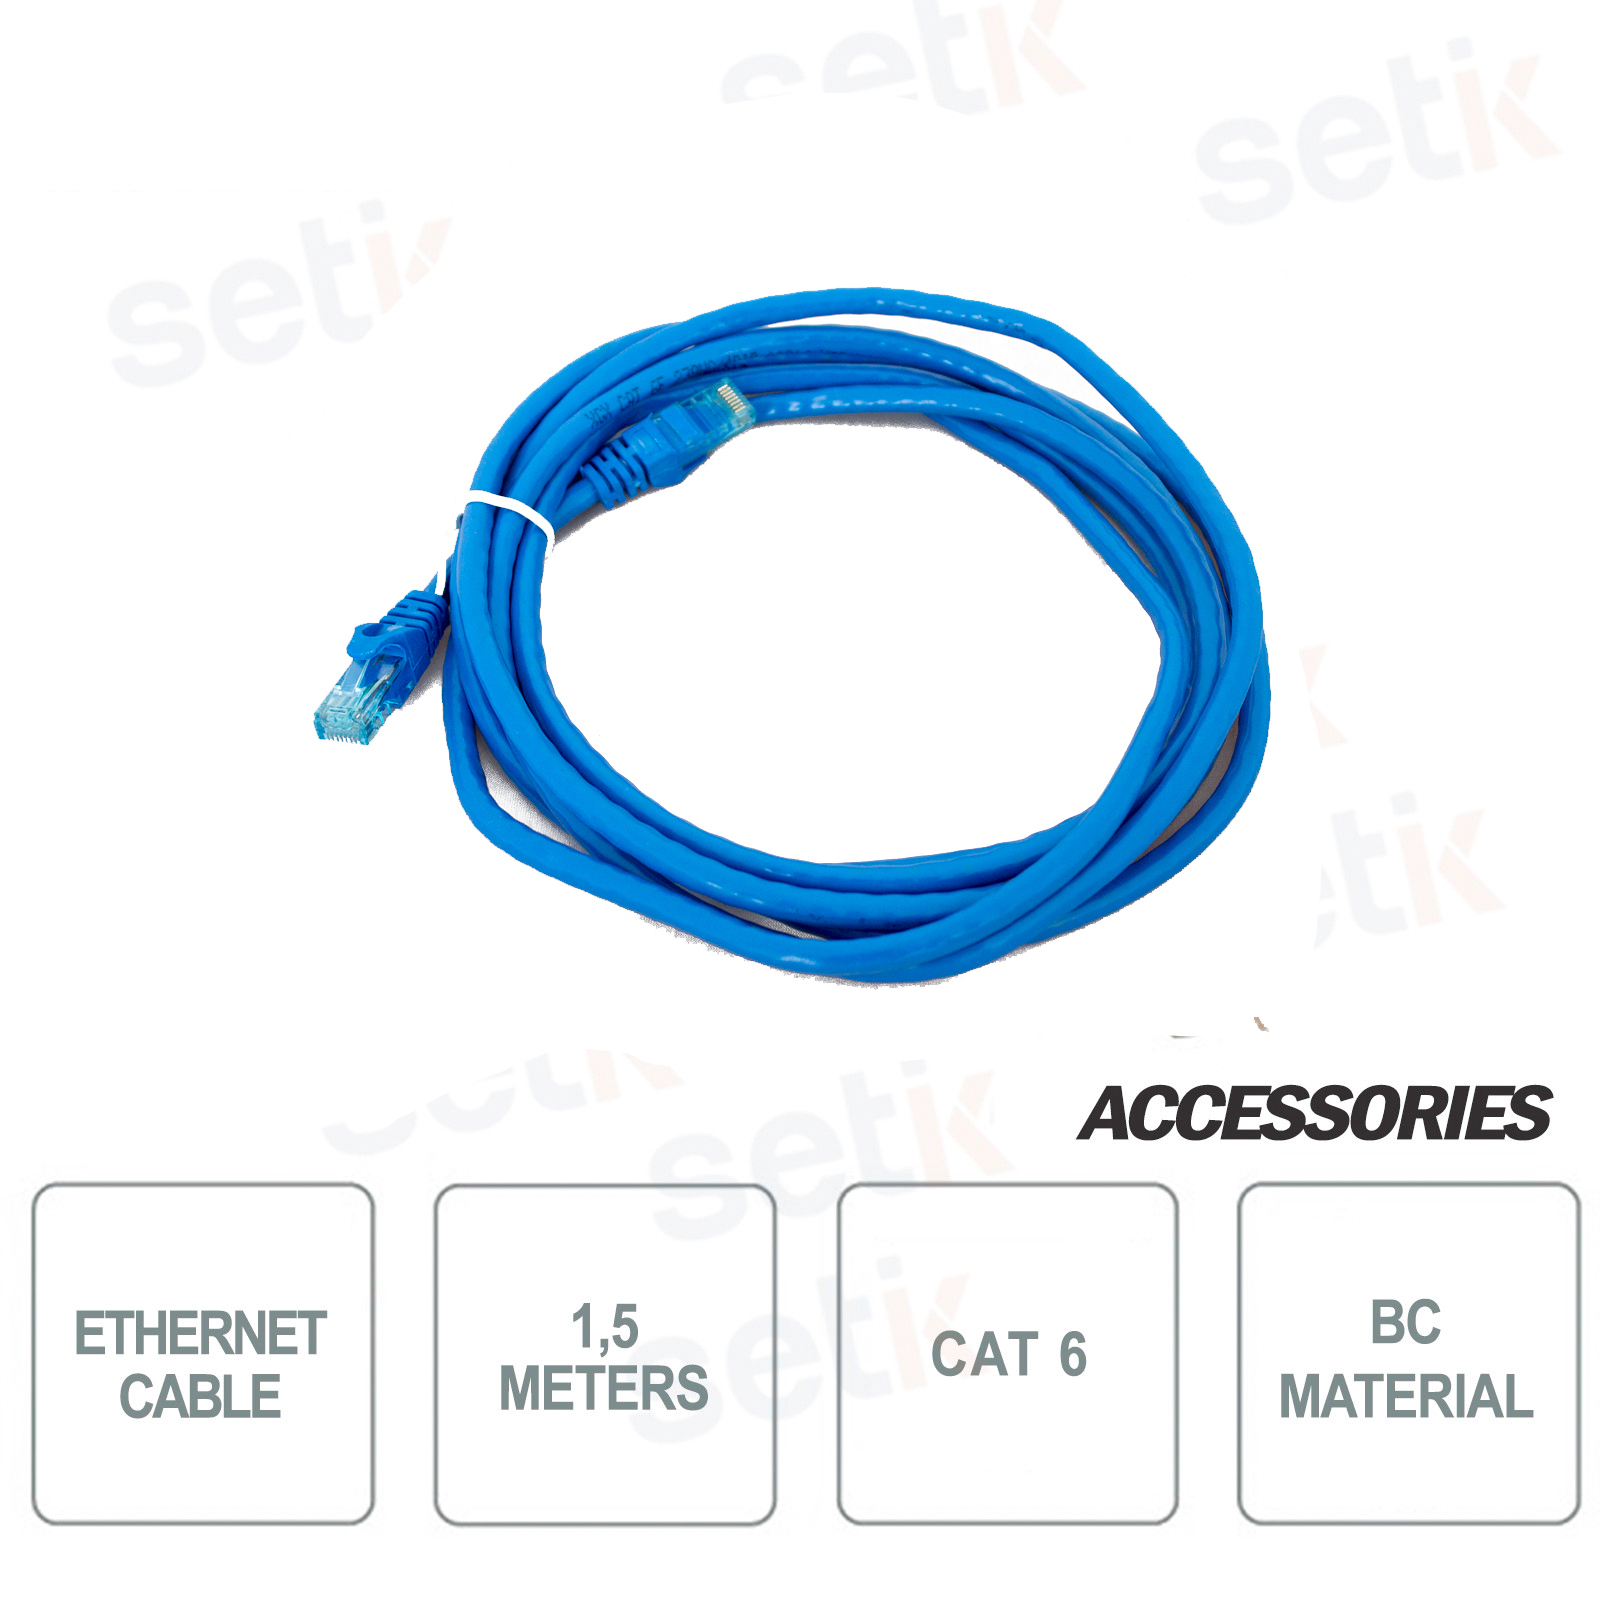 Cable LAN con conector RJ-45 Cable de conexión de red de Internet